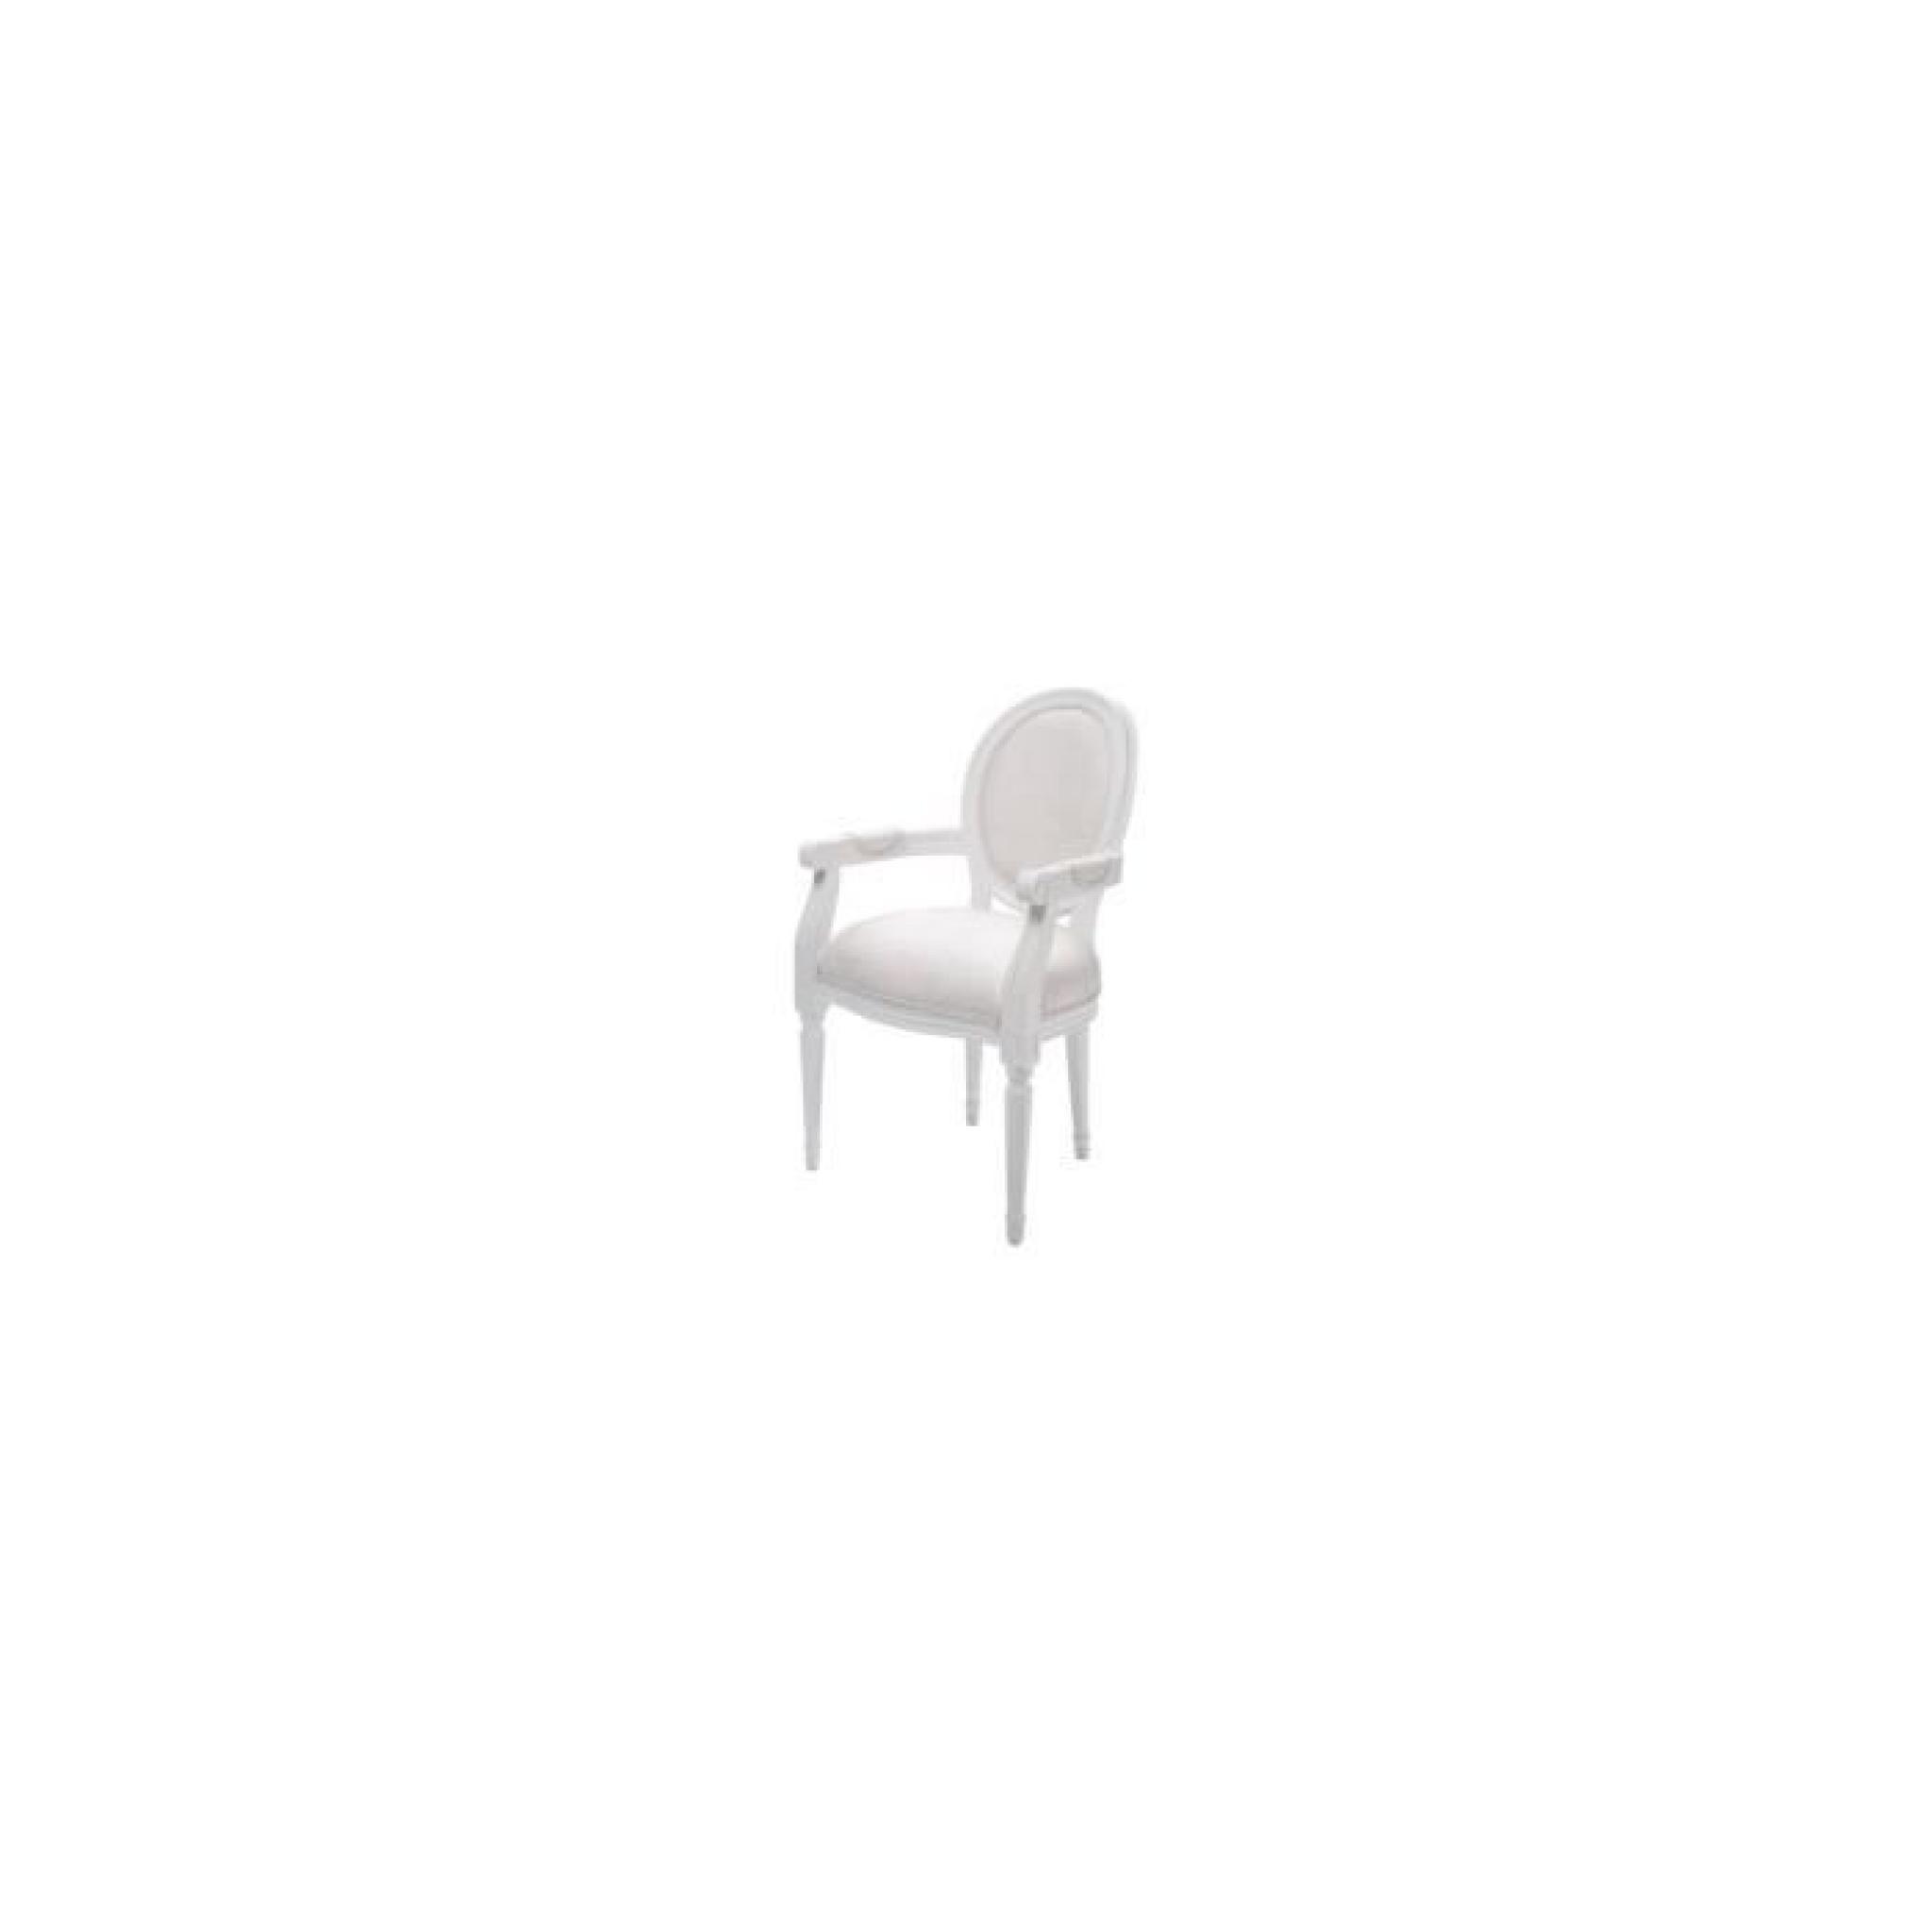 Chaise louis croco blanc avec accoudoirs  pas cher